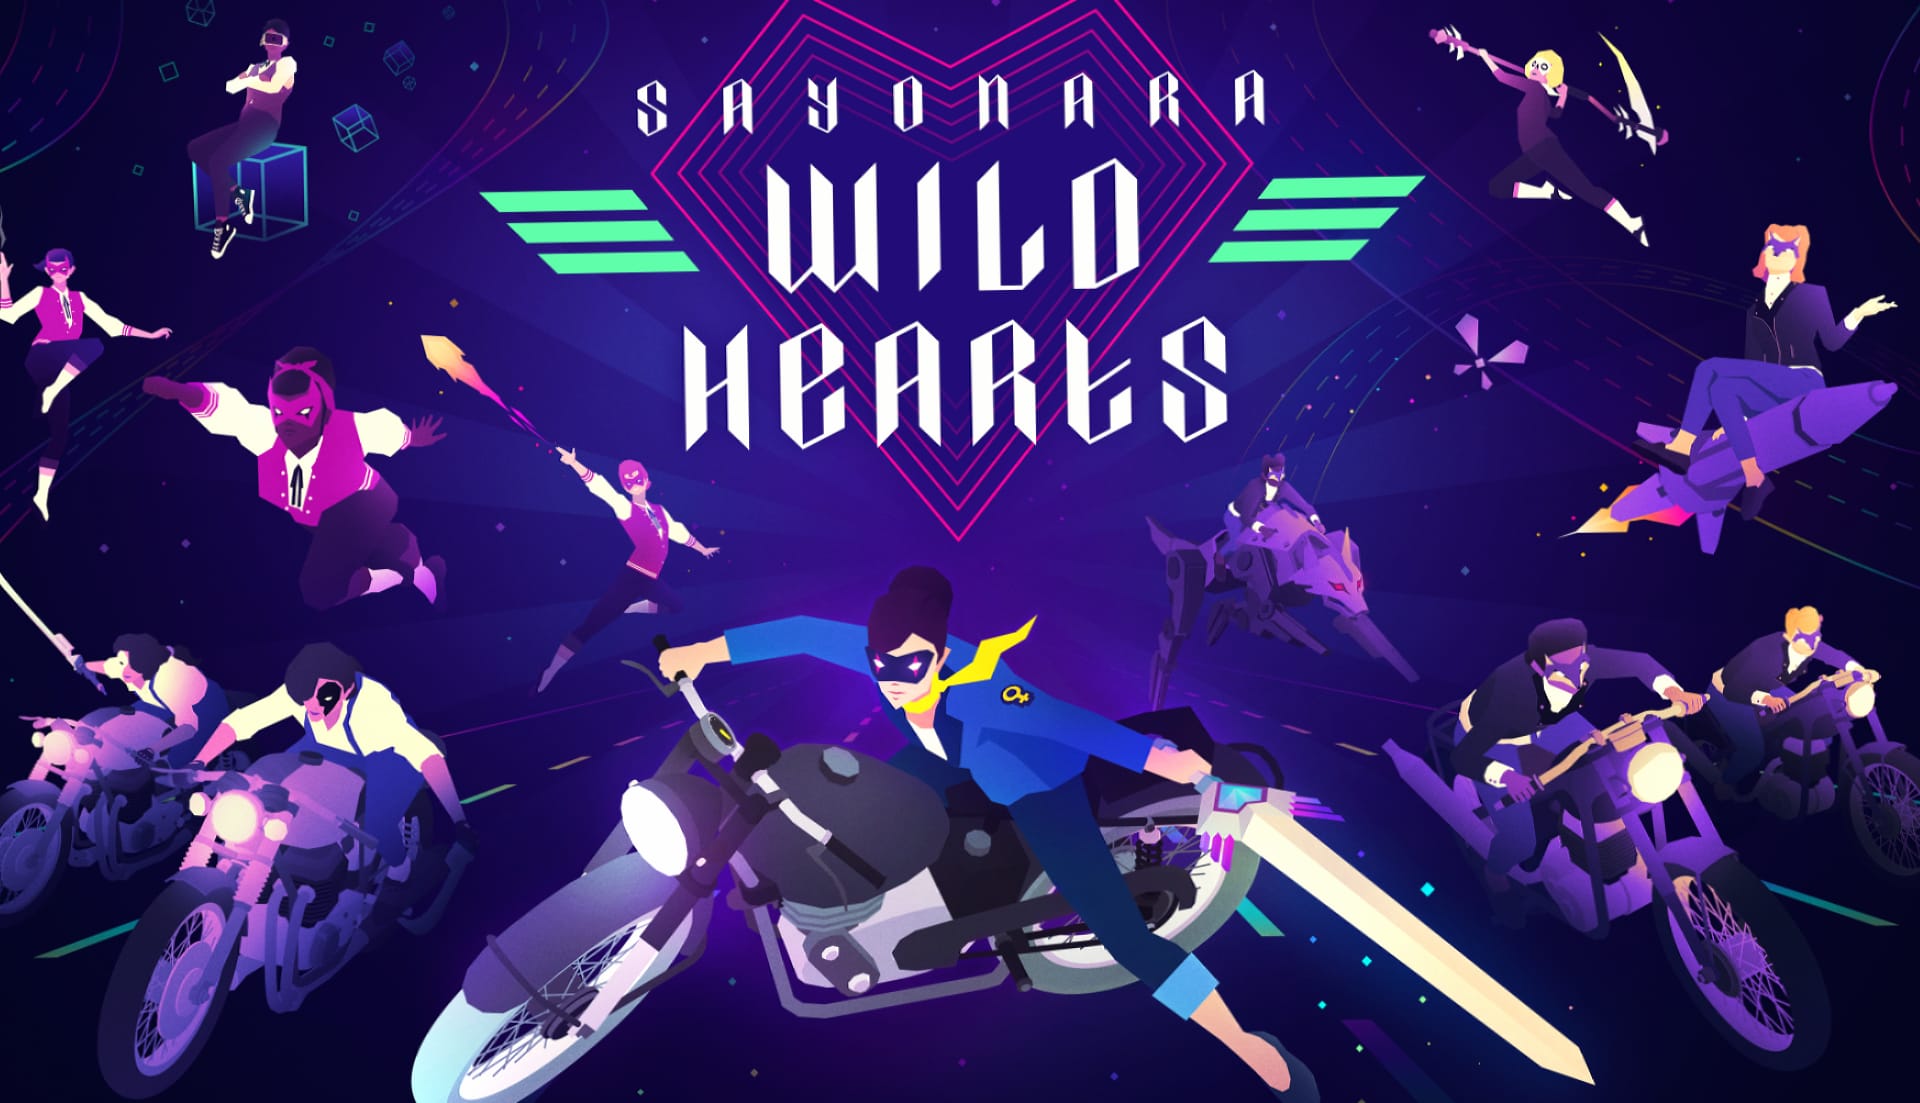 Sayonara Wild Hearts at 640 x 1136 iPhone 5 size wallpapers HD quality